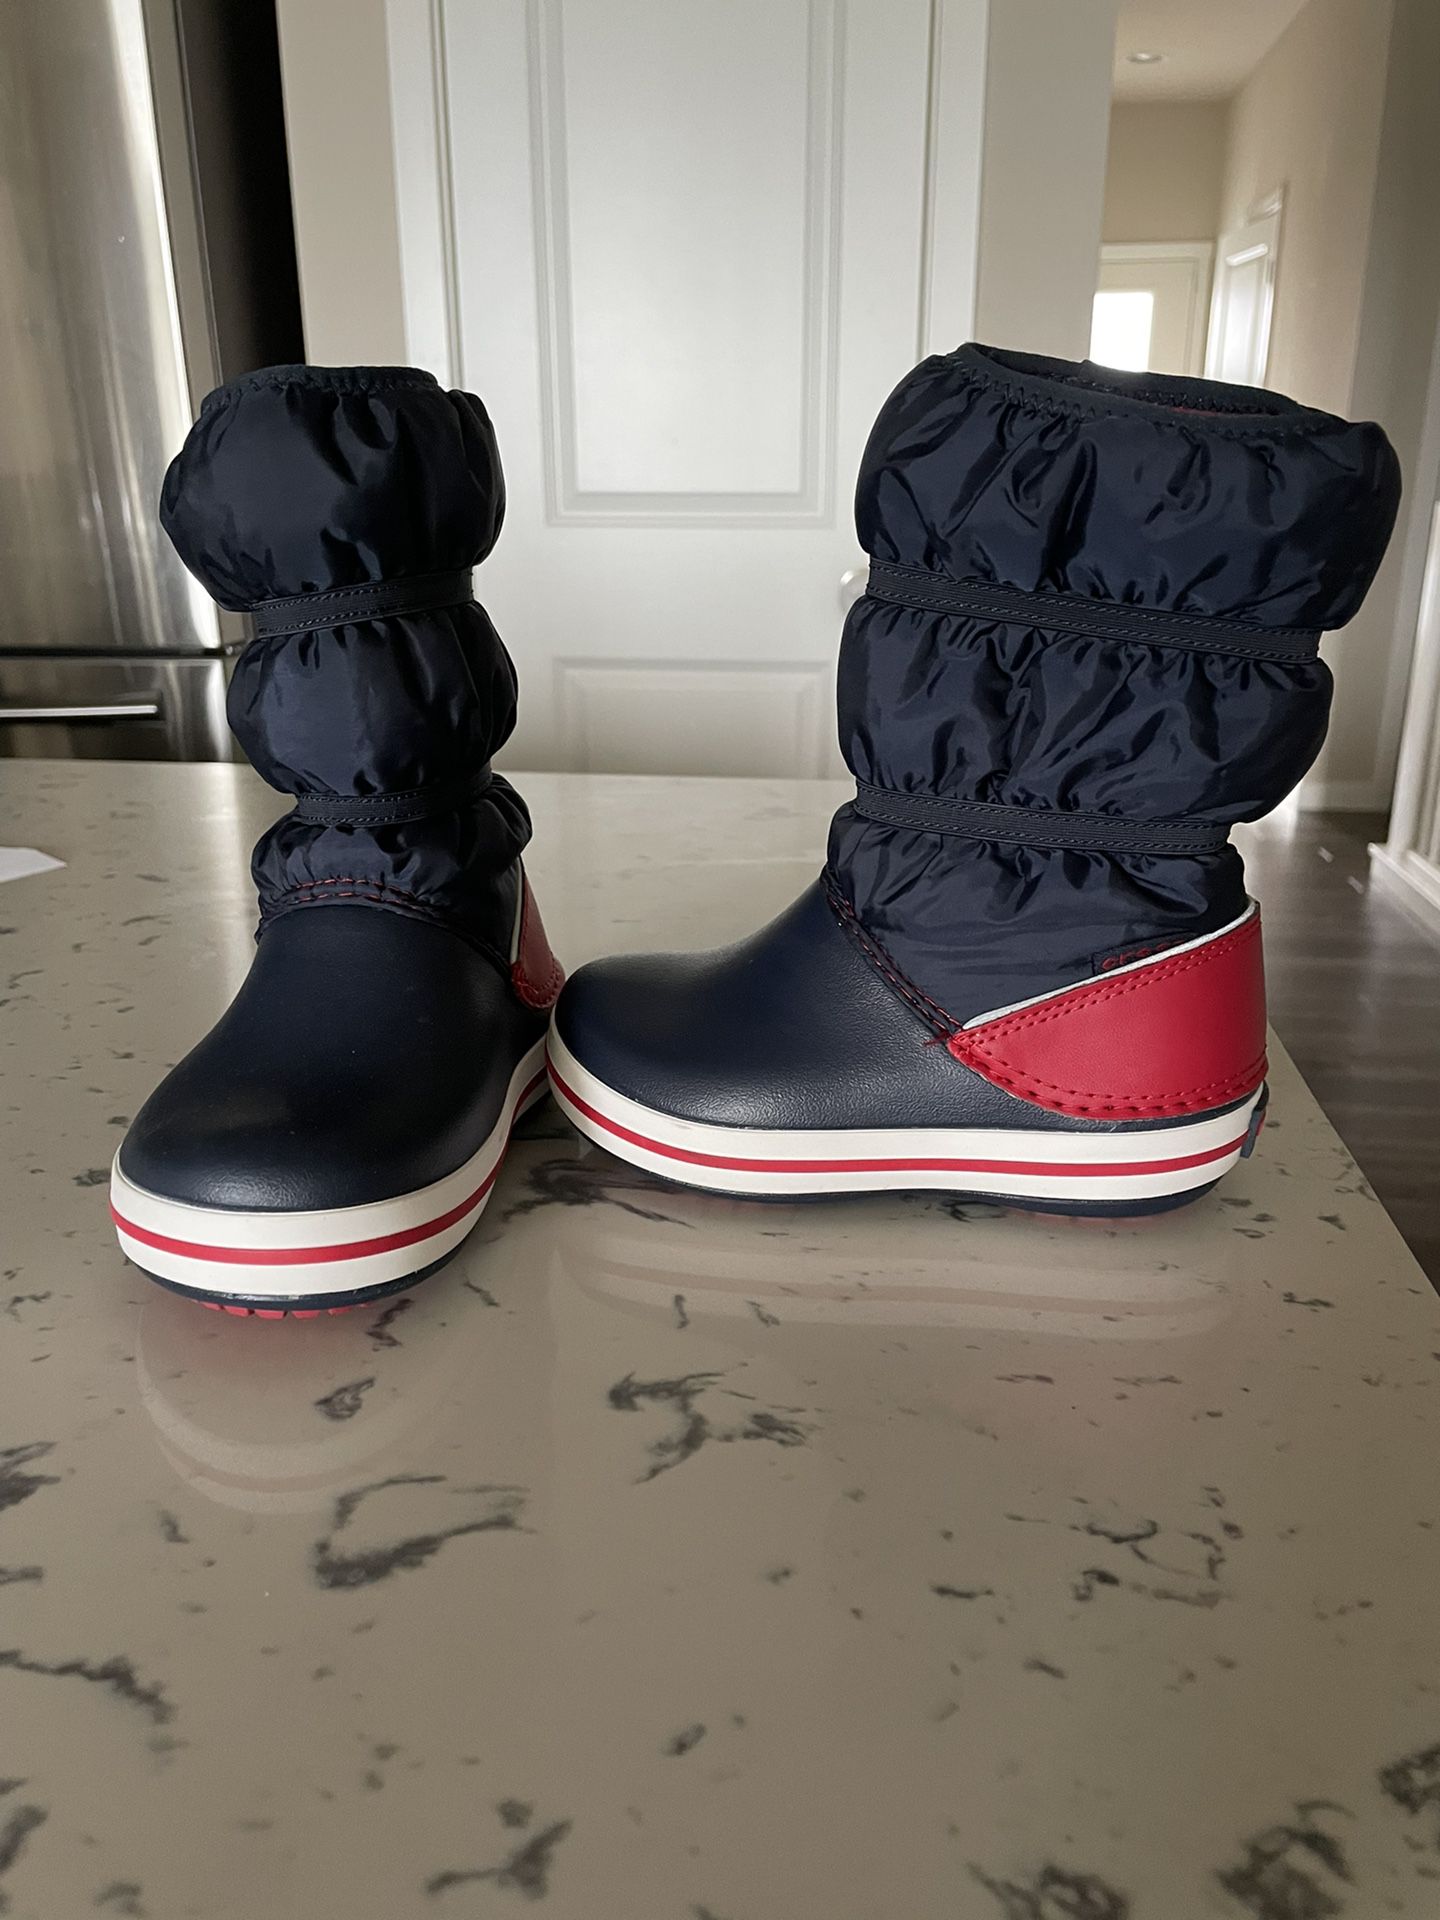 Toddler Boy Size 9 Rain/Snow Boots 